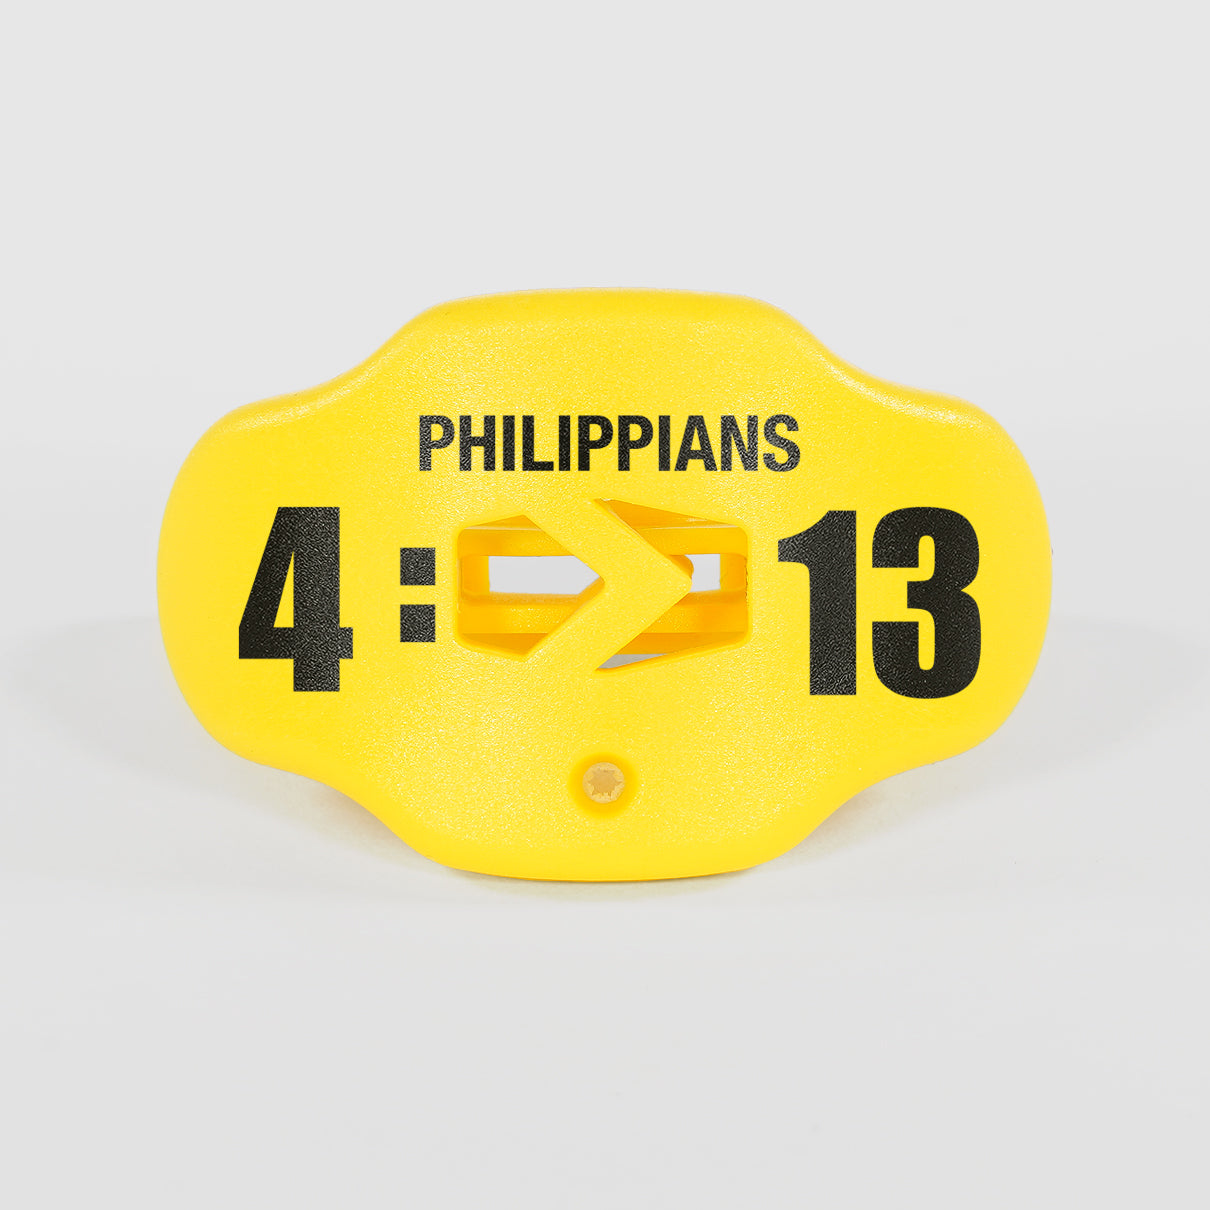 Philippians 4:13 Hue Yellow Football Mouthguard